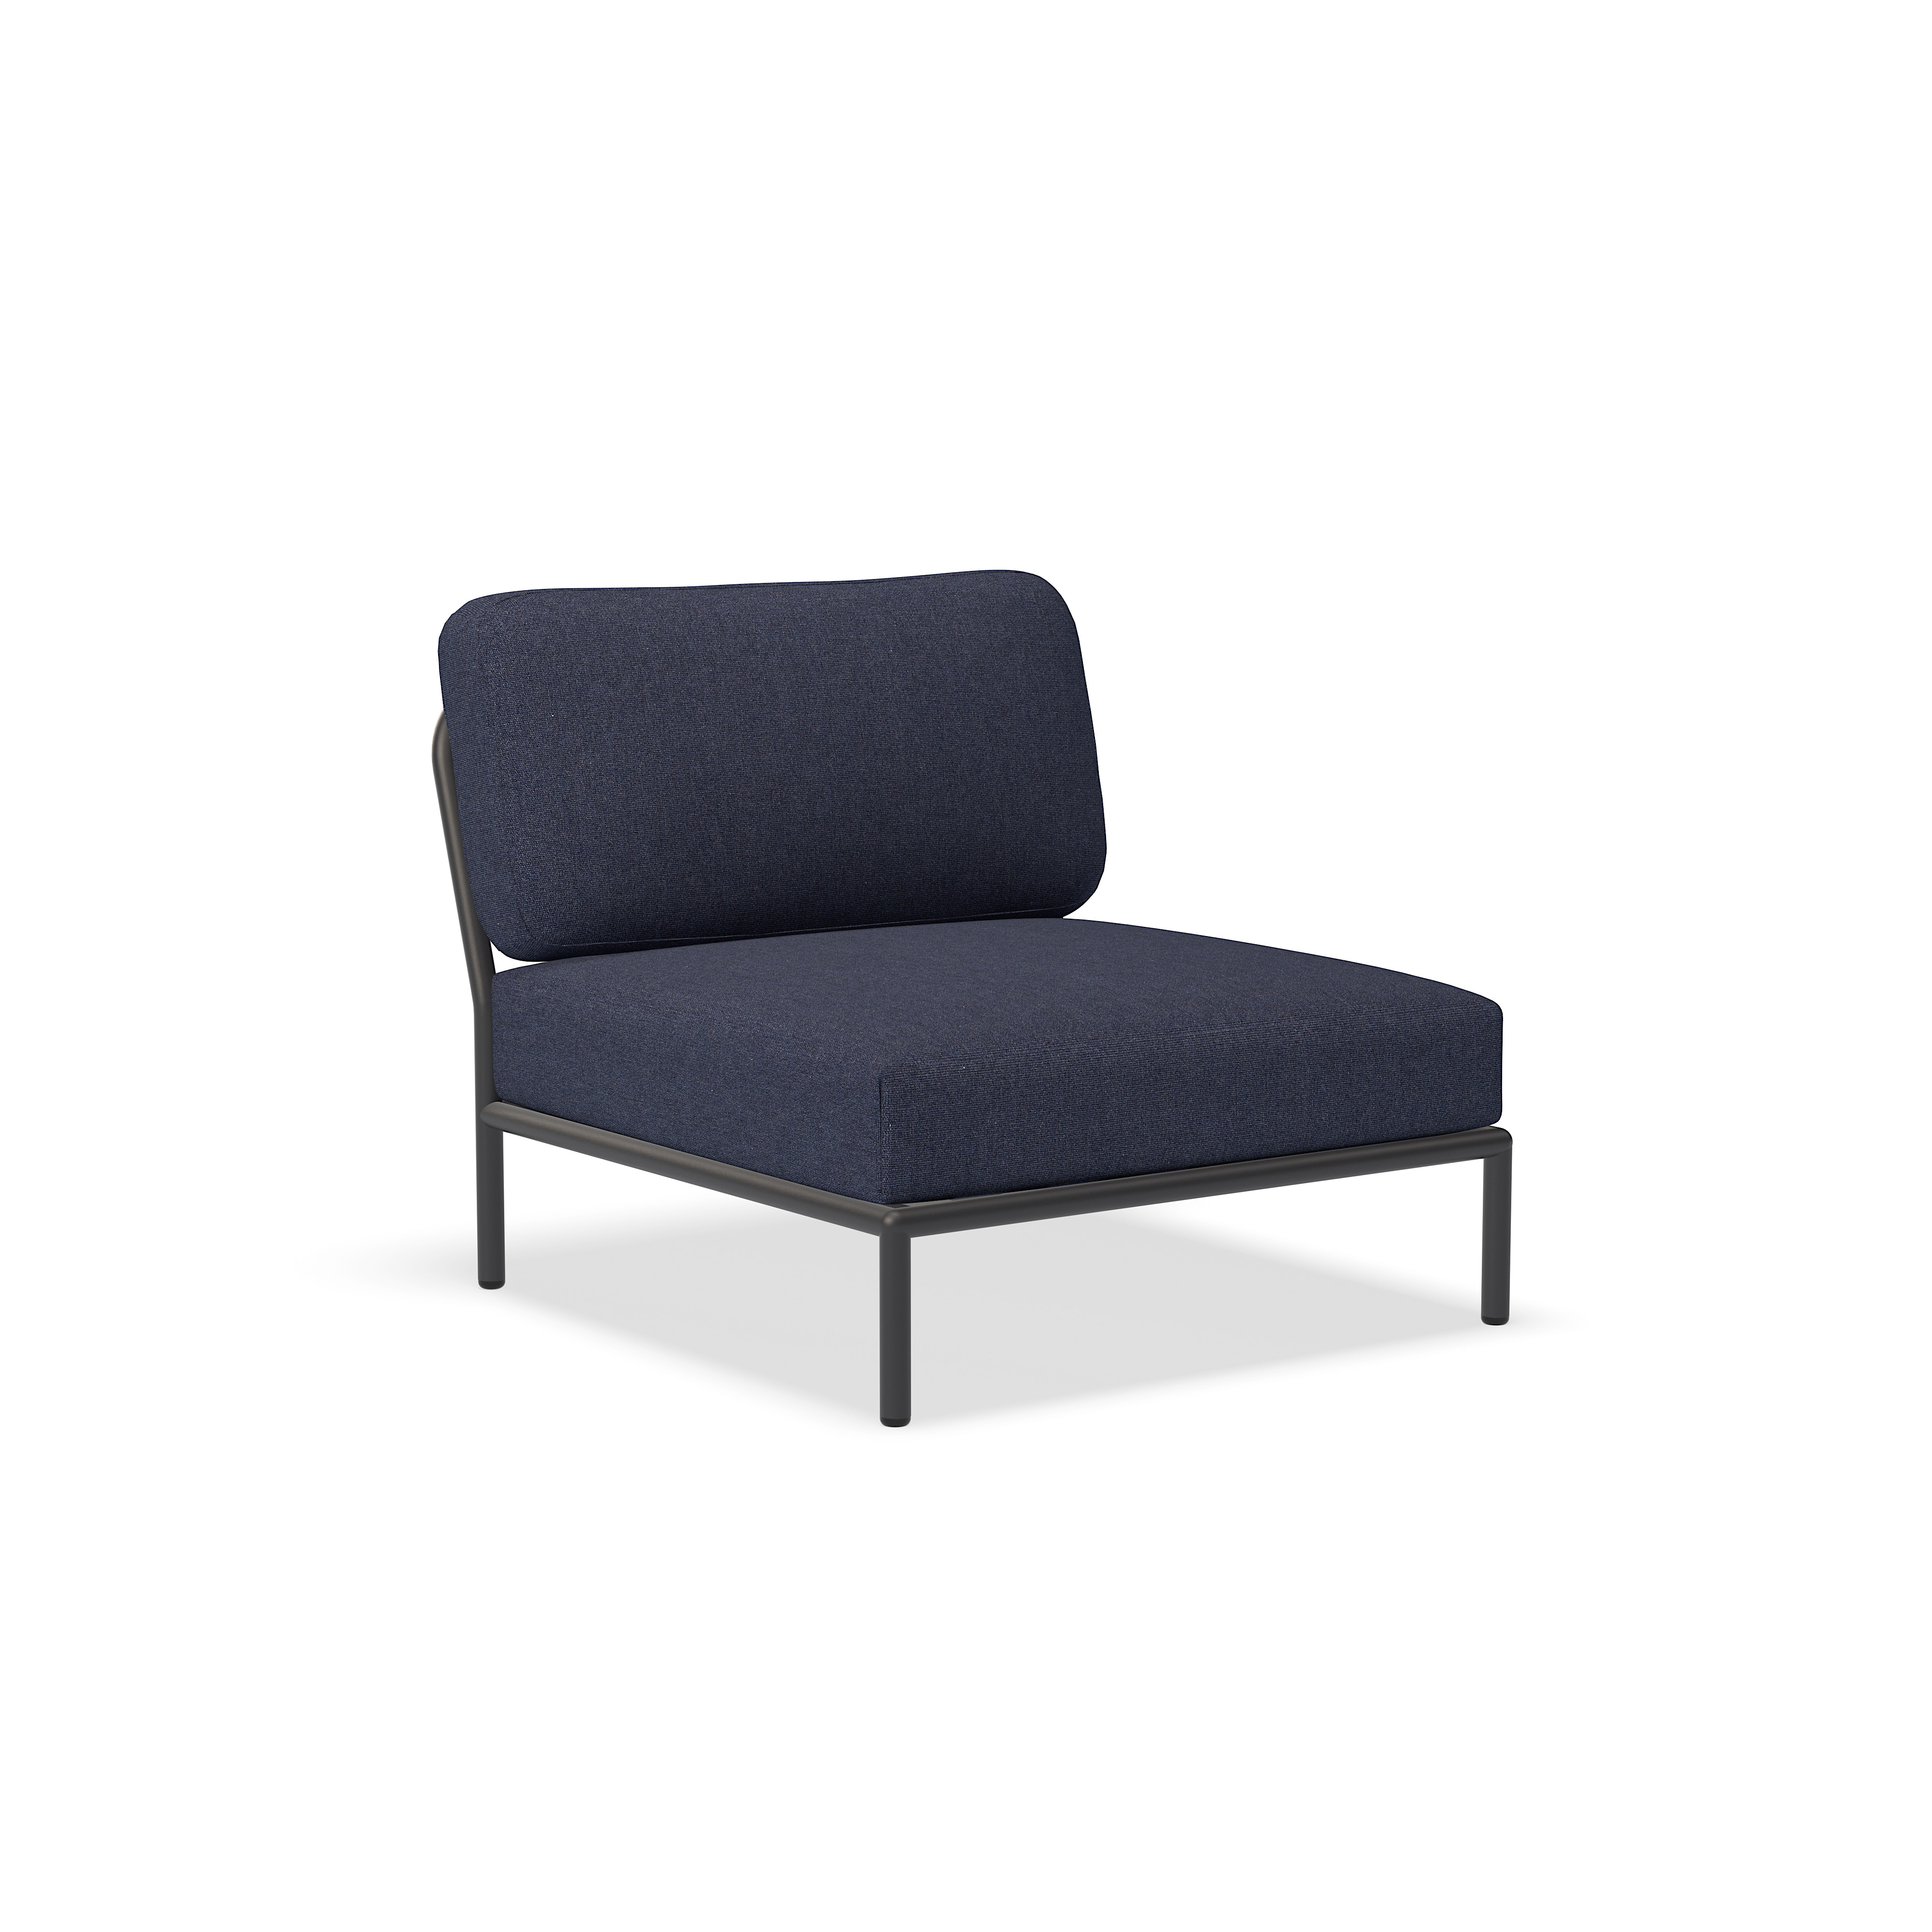 الكرسي - 12205-5351 - كرسي ، نيلي (HERITAGE) ، هيكل رمادي غامق